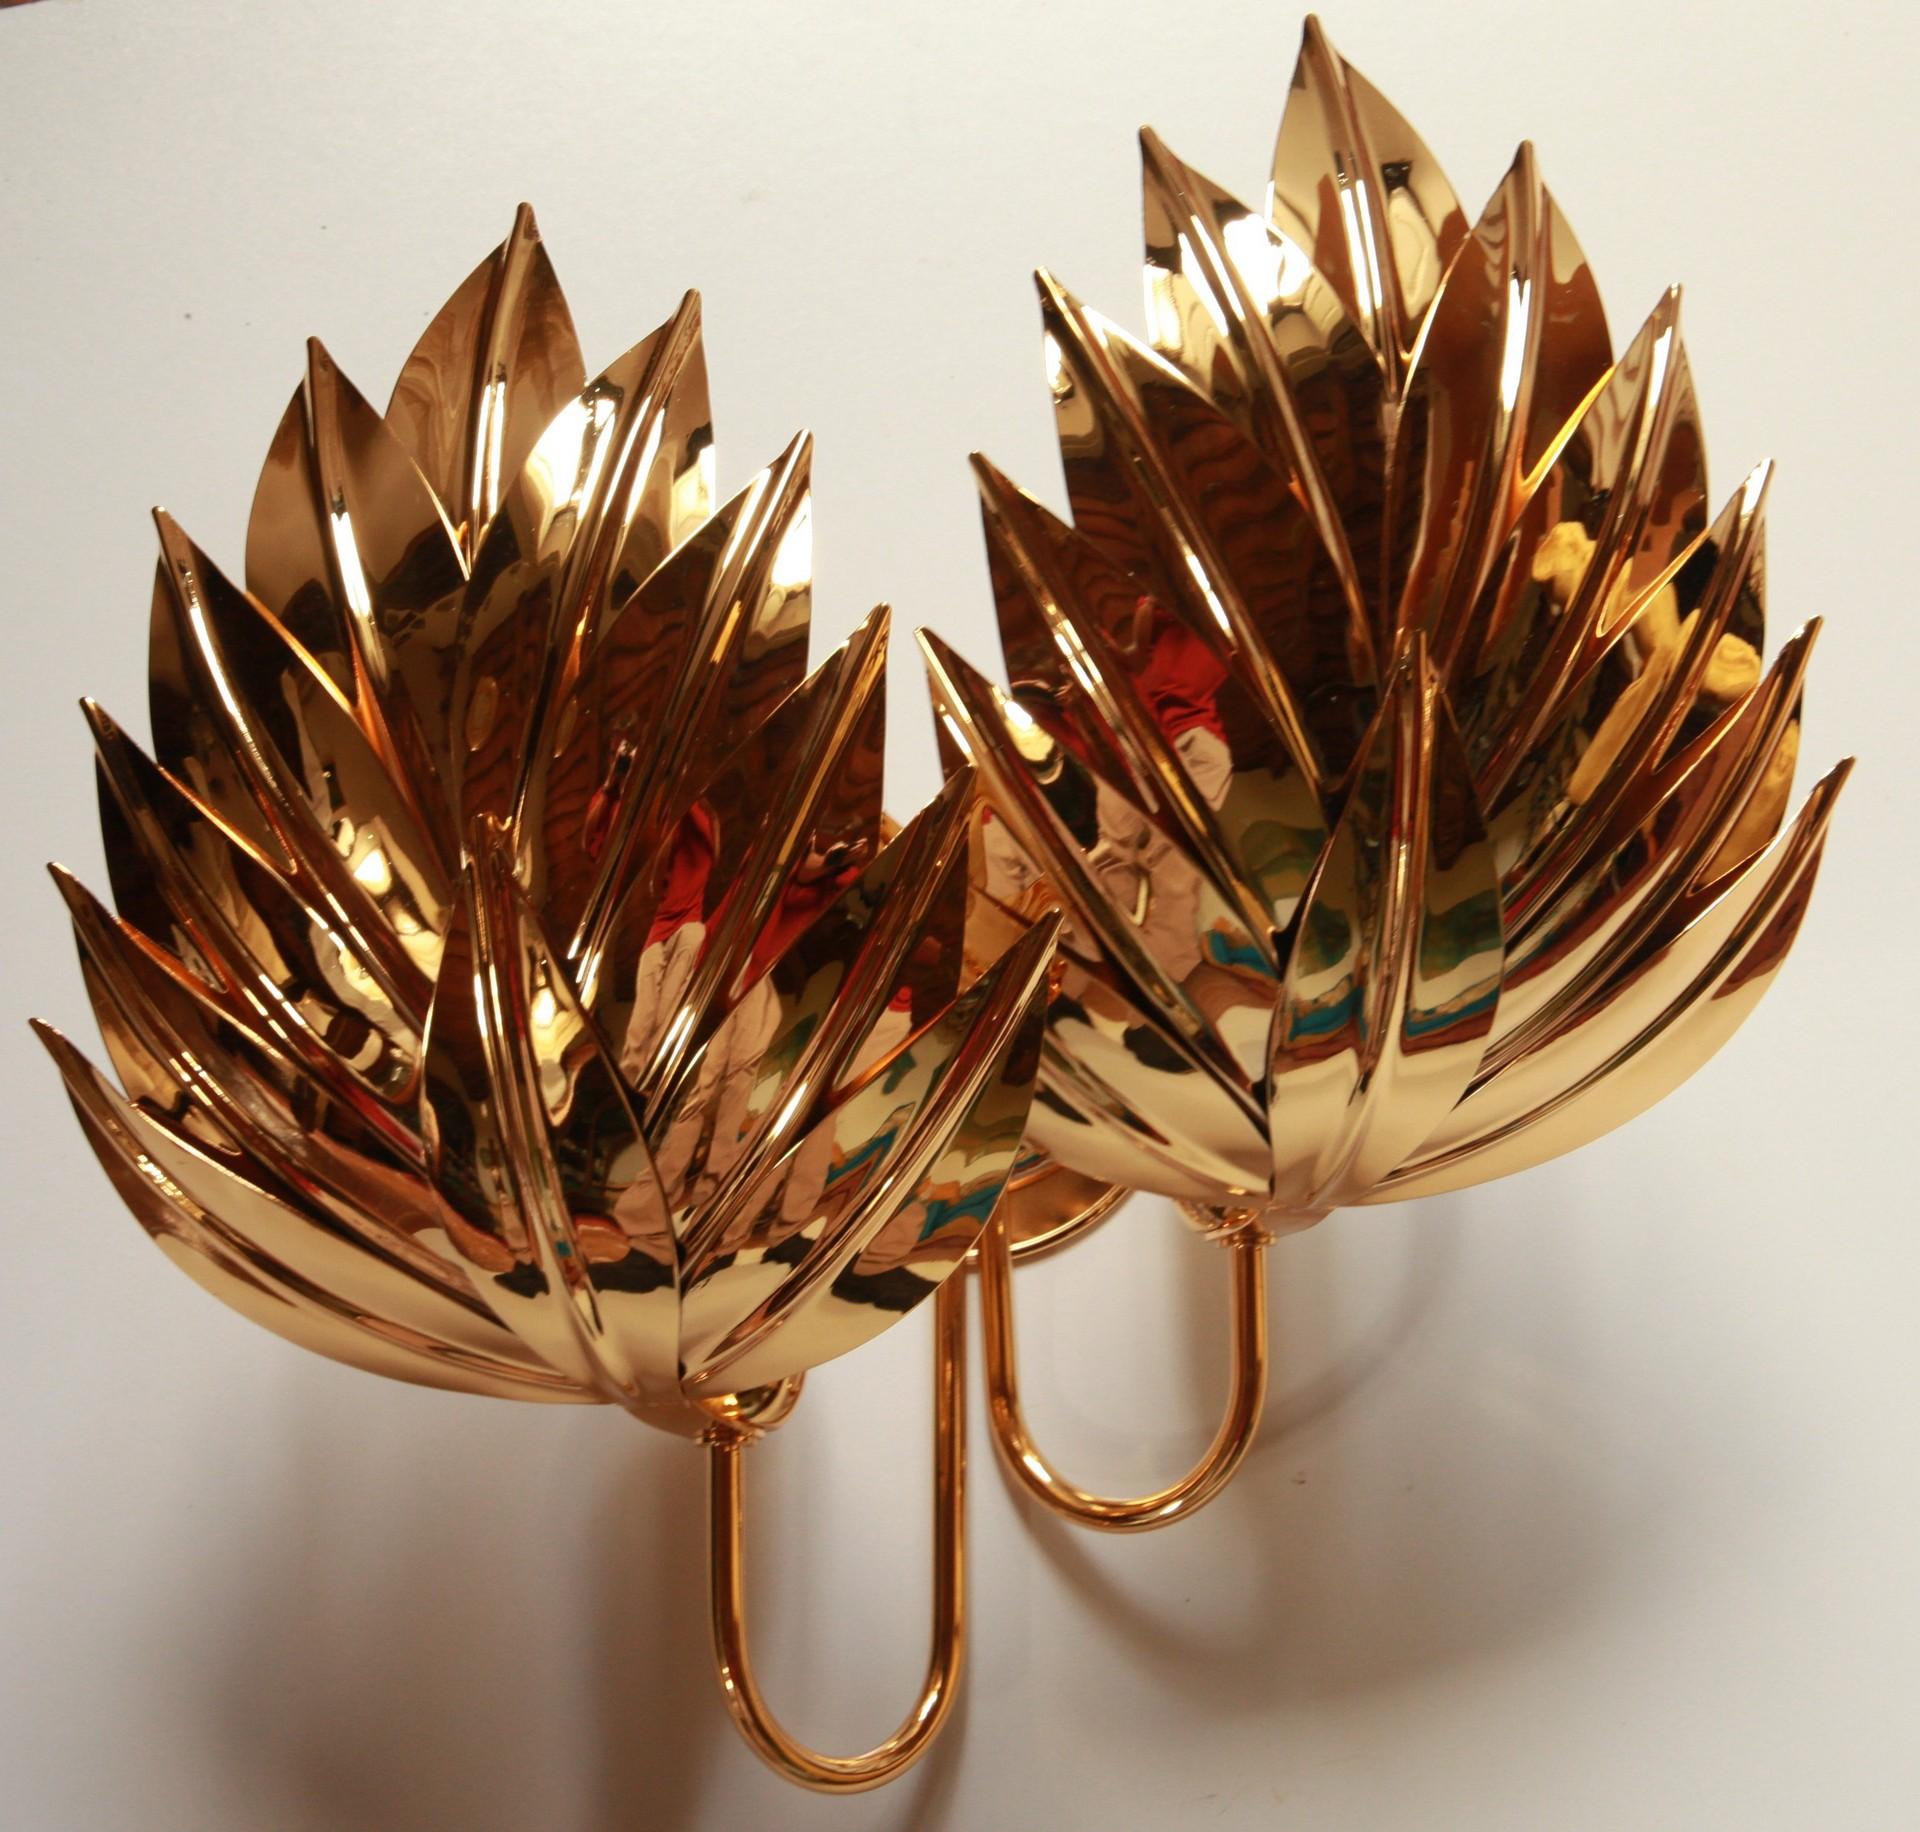 Full Set of 9 Palm Sconces, Brass Gold-Plated, Maison Jansen Attribution 2